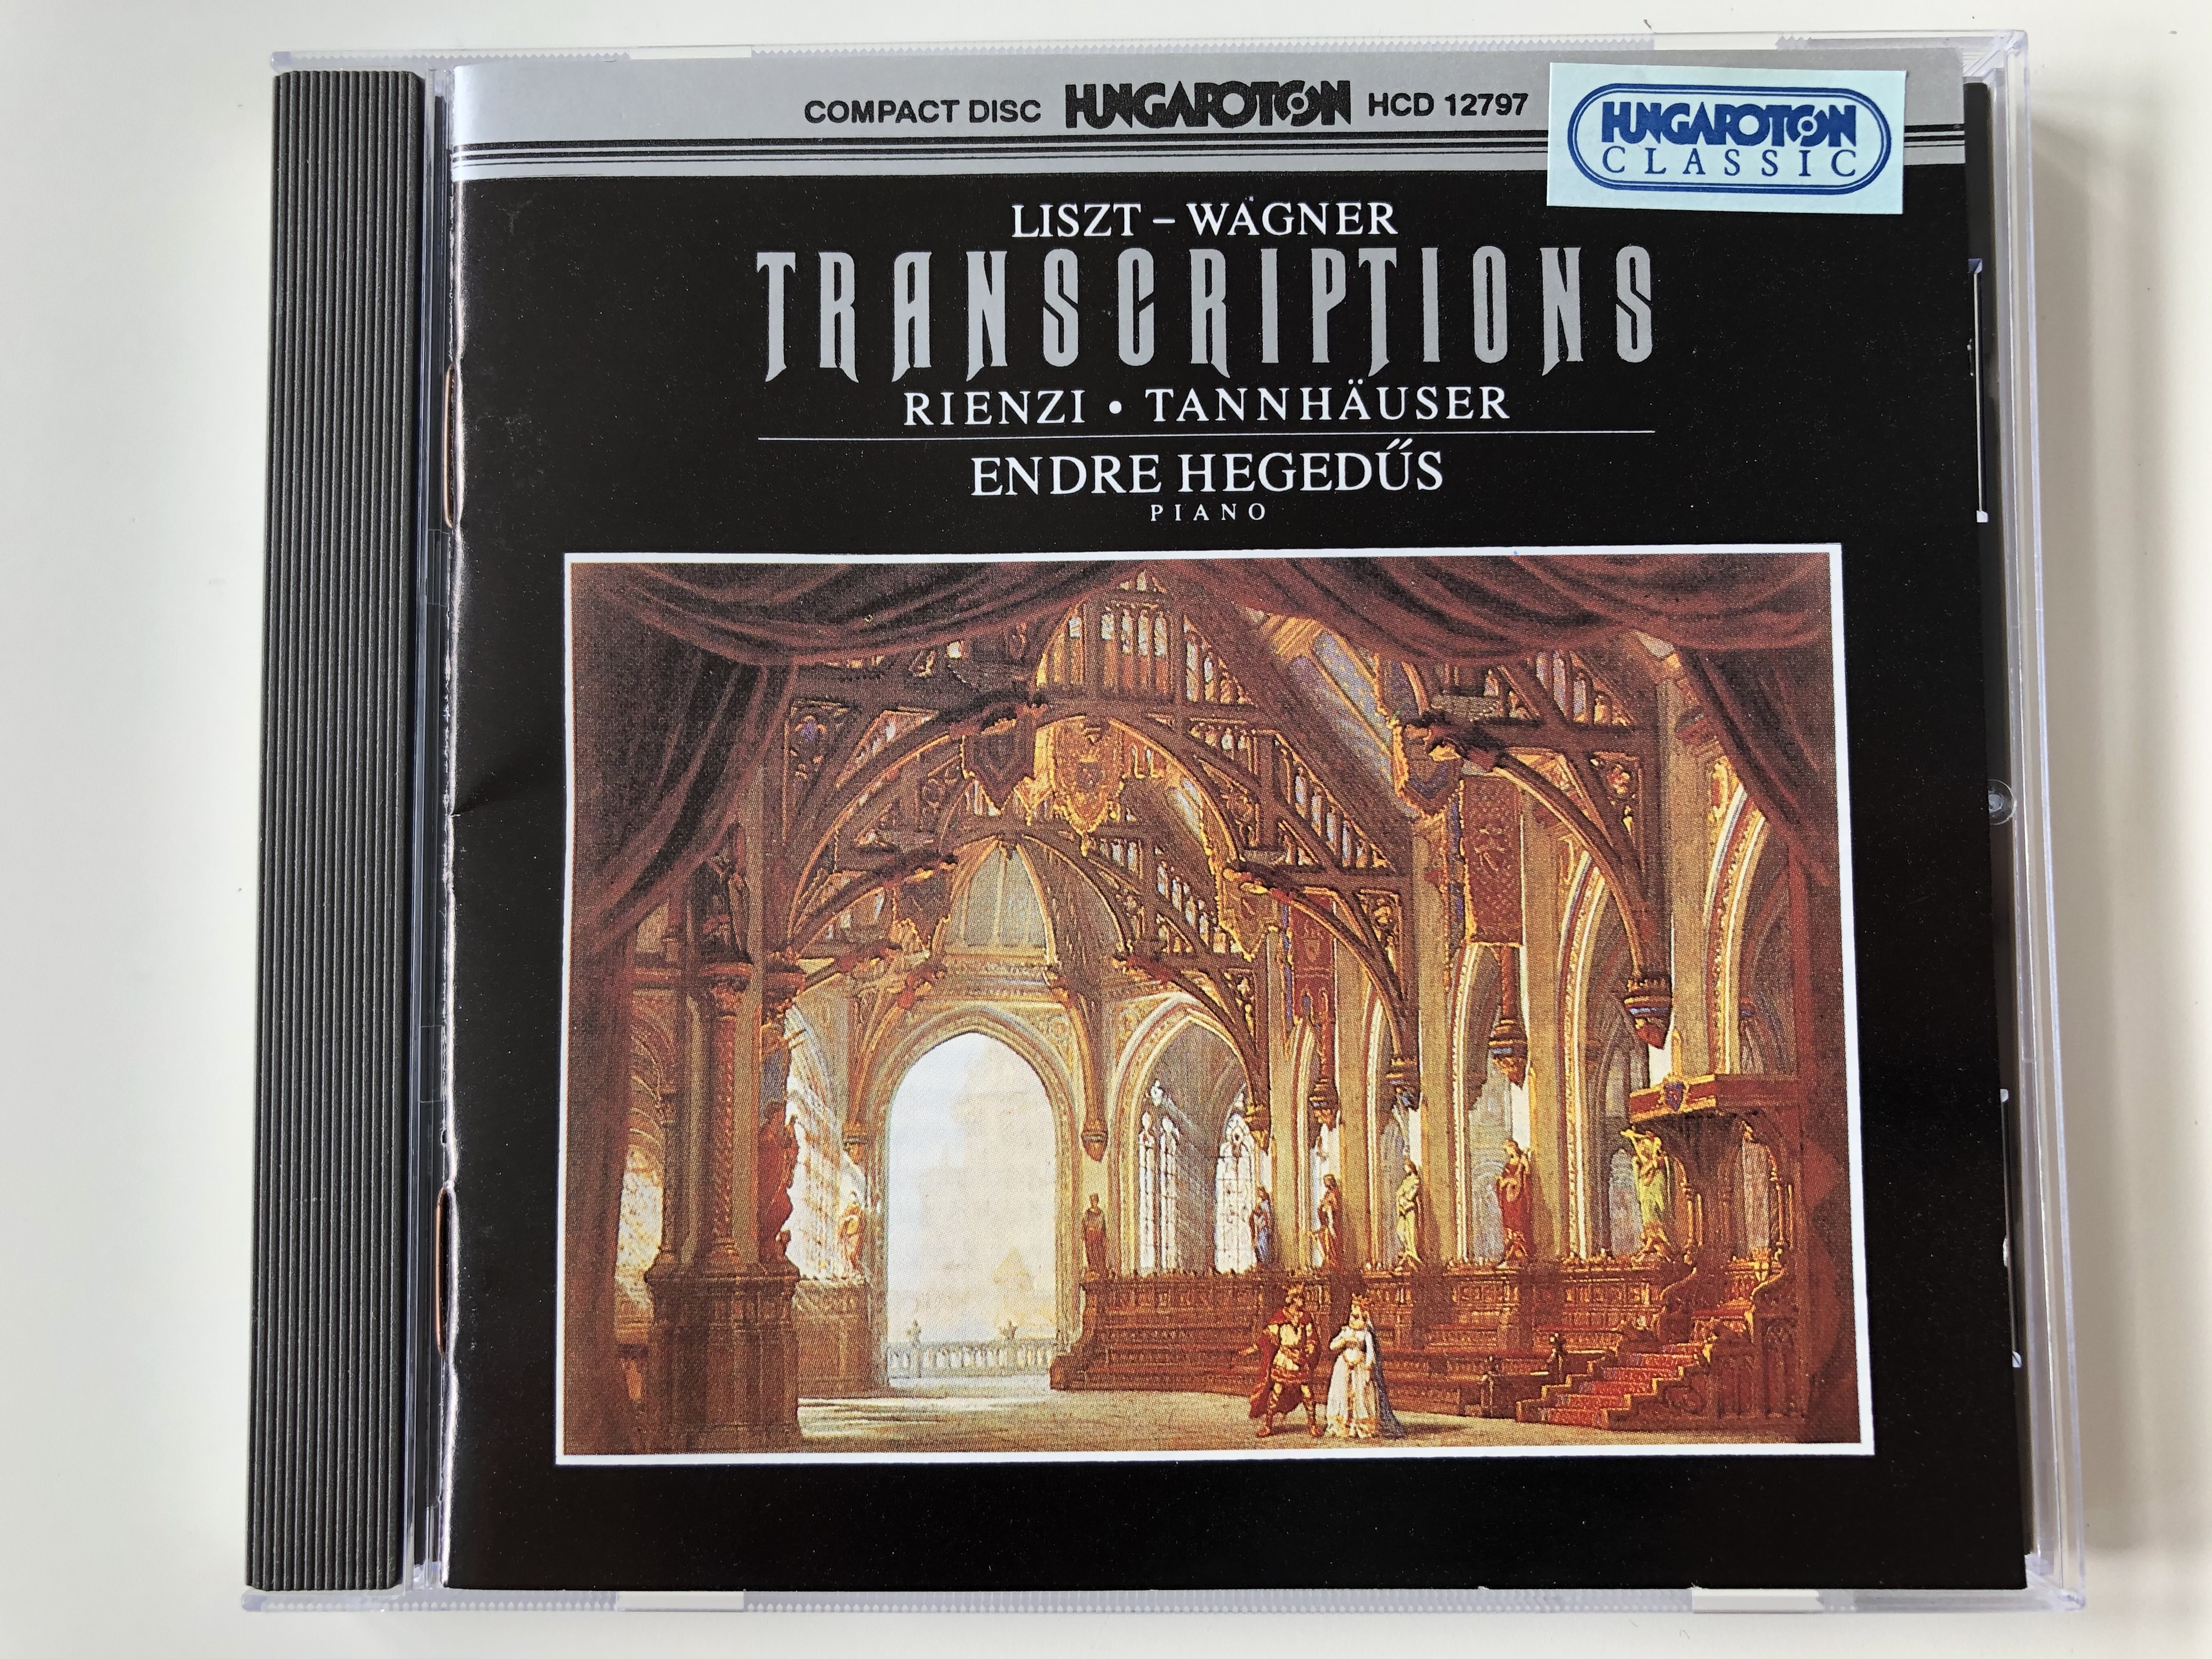 liszt-wagner-transcriptions-rienzi-tannhauser-endre-hegedu-s-piano-hungaroton-classic-audio-cd-1995-stereo-hcd-12797-1-.jpg